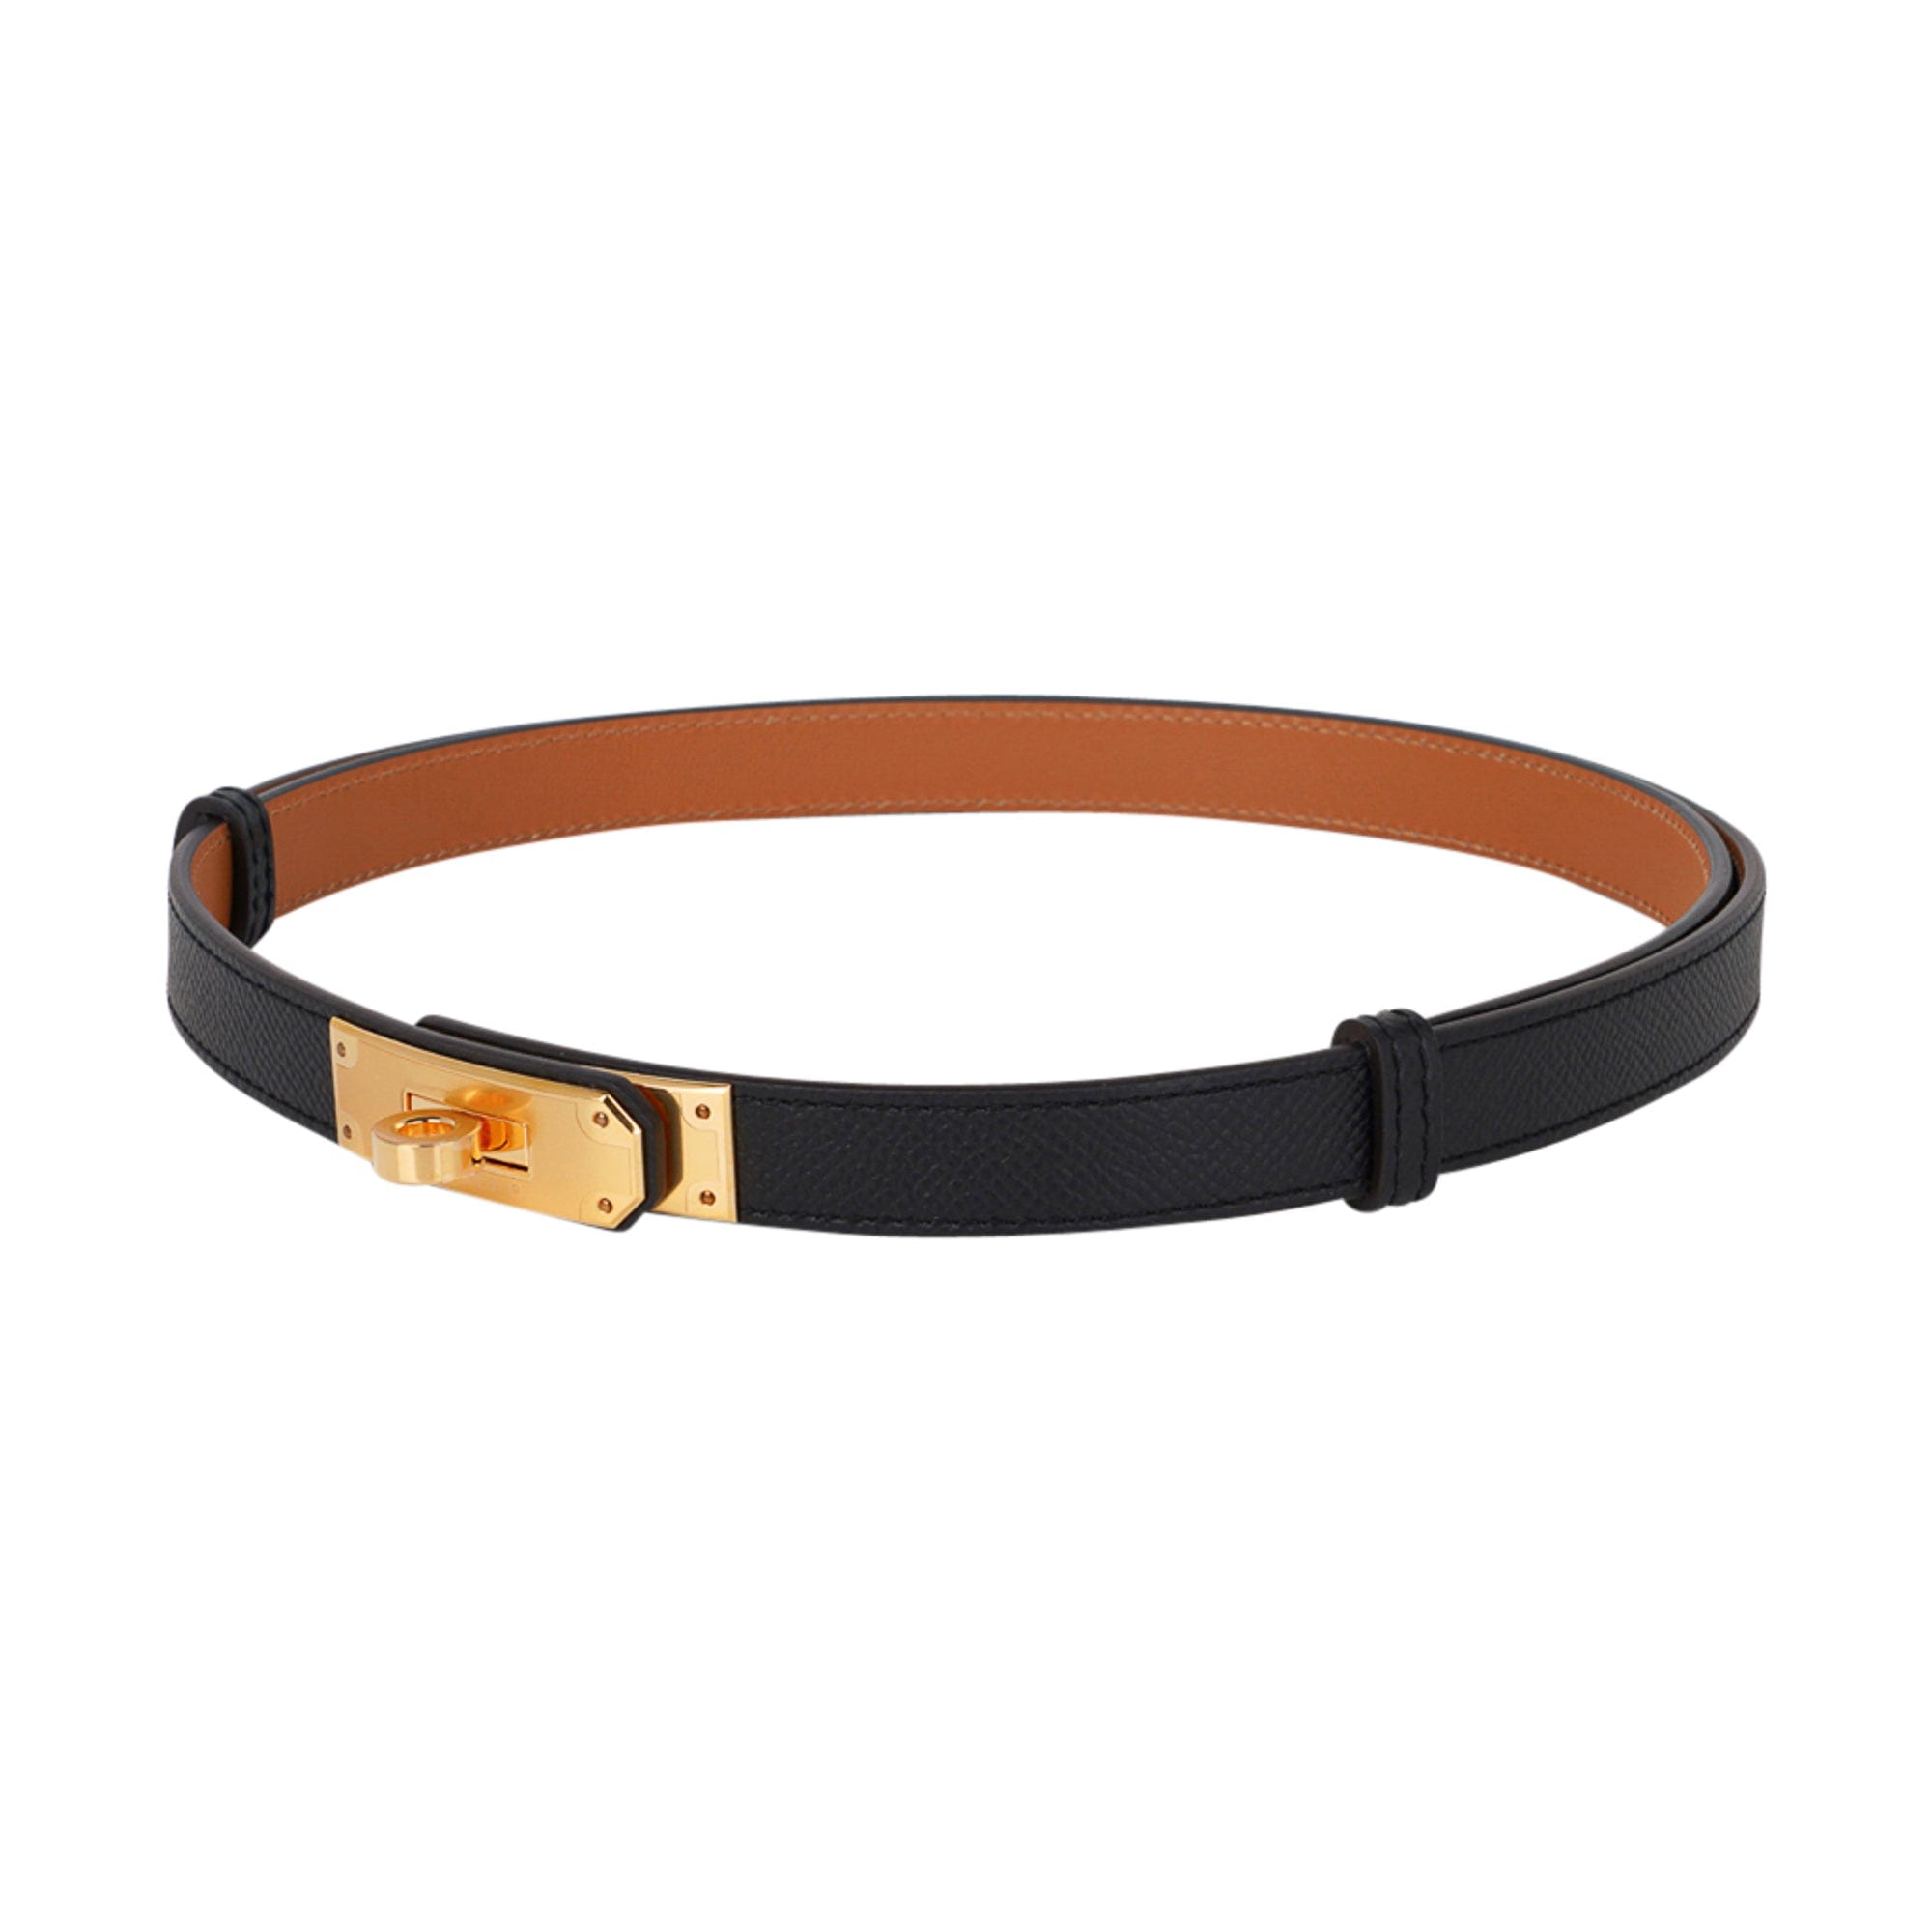 Kelly leather belt Hermès Gold size S International in Leather - 36914846